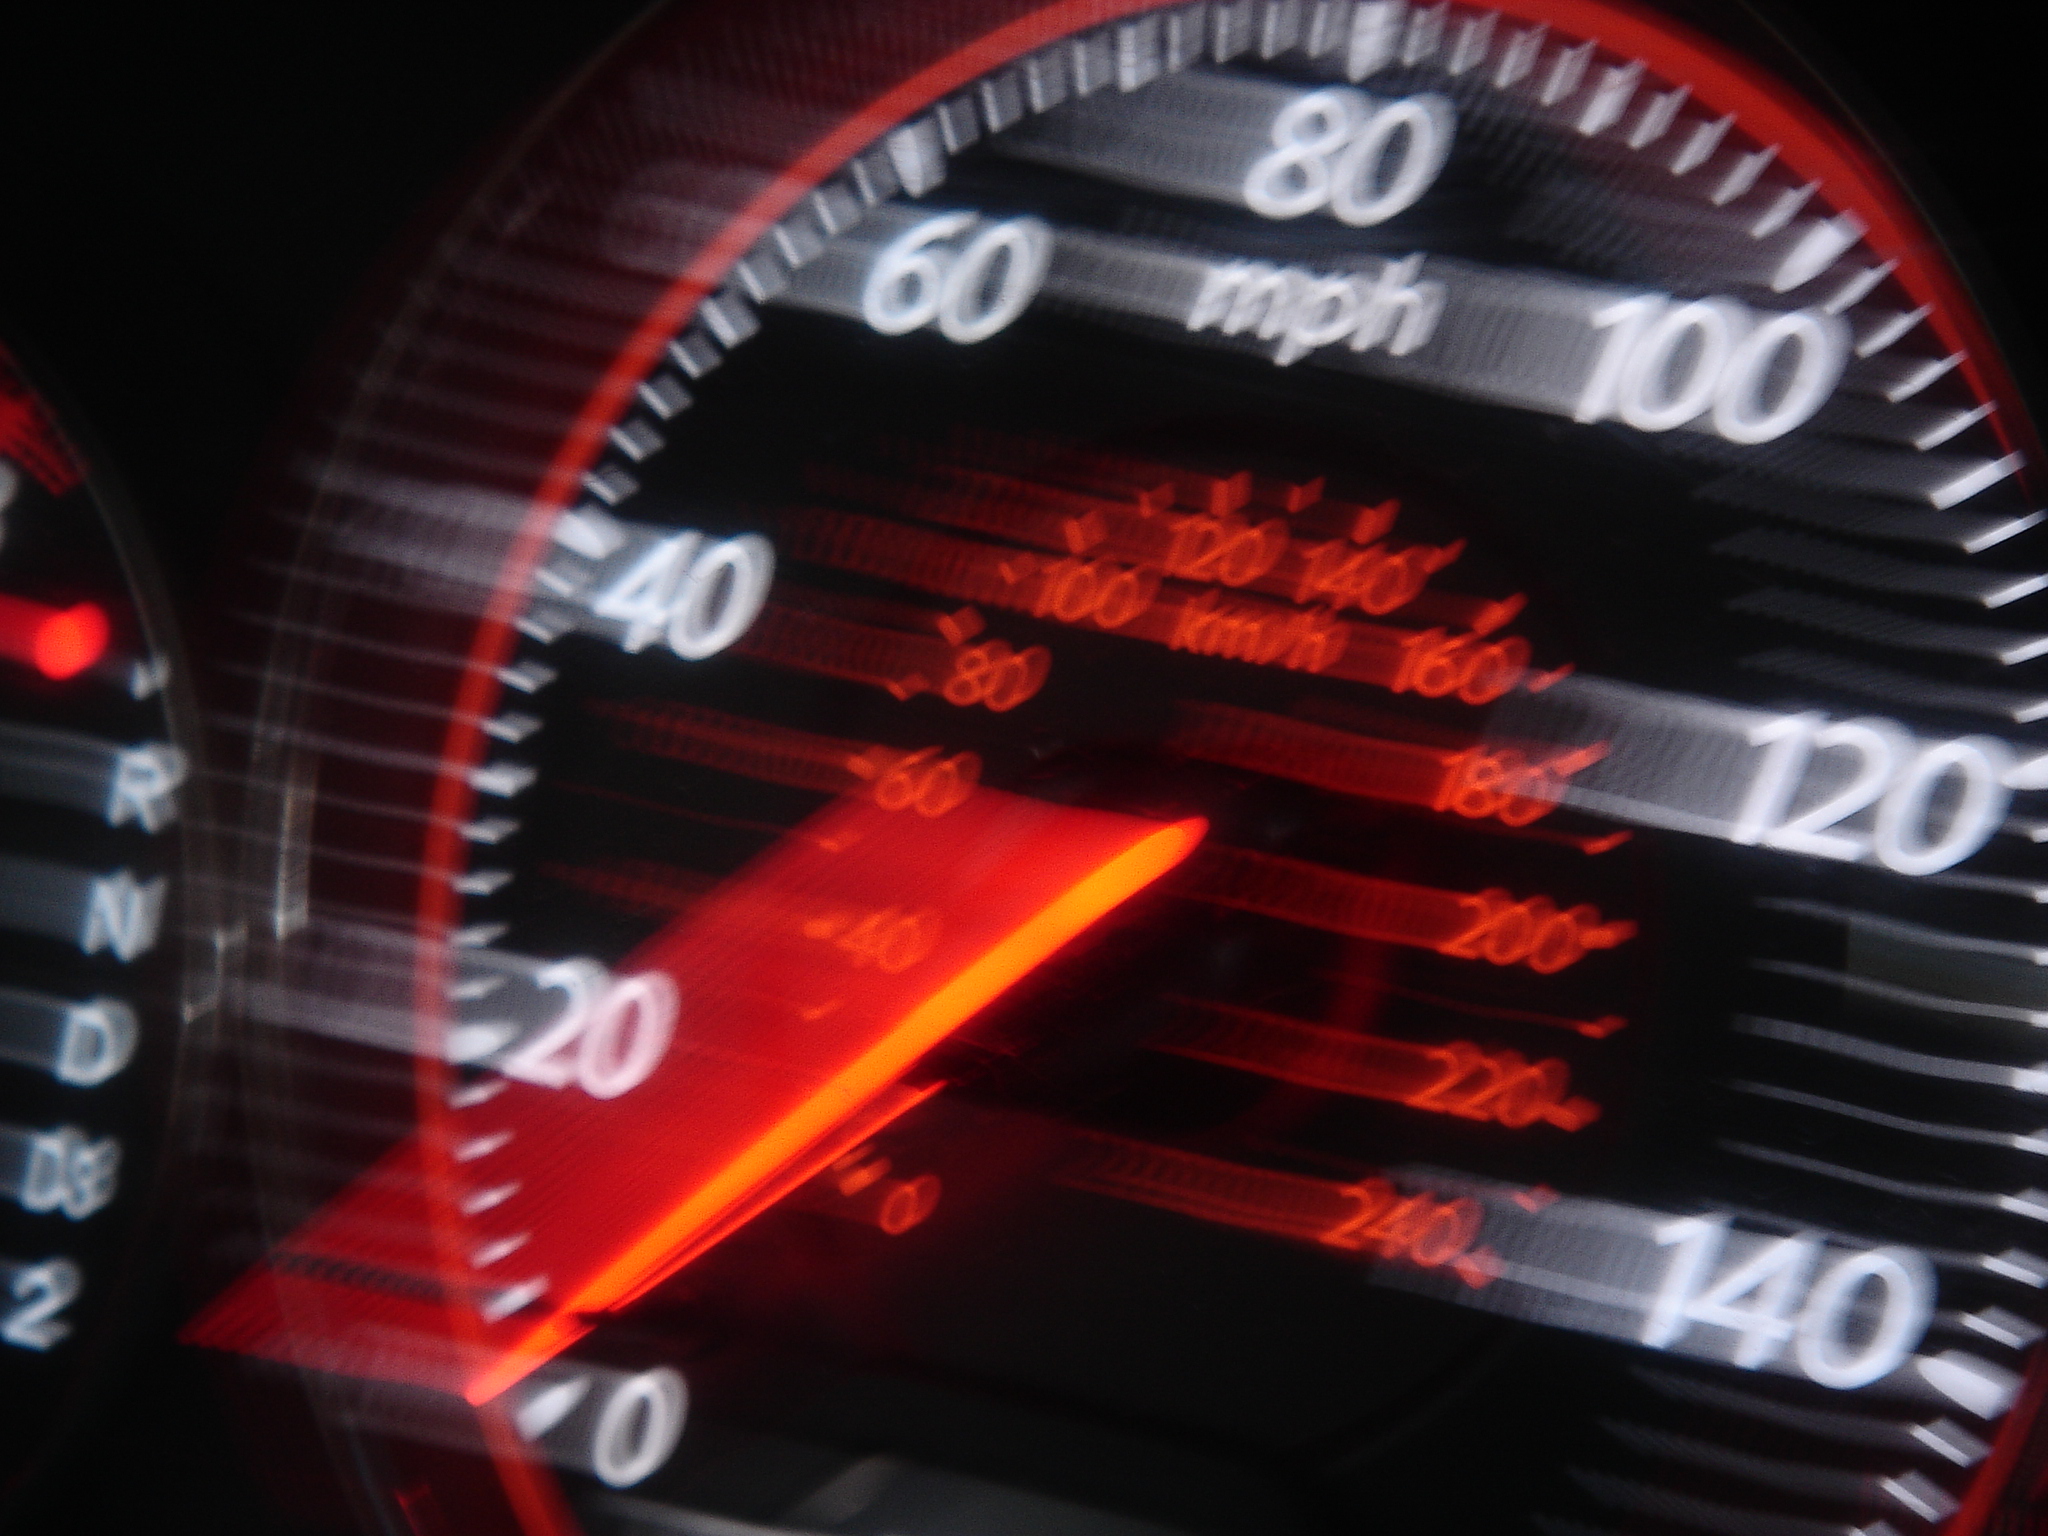 Analogue speed display